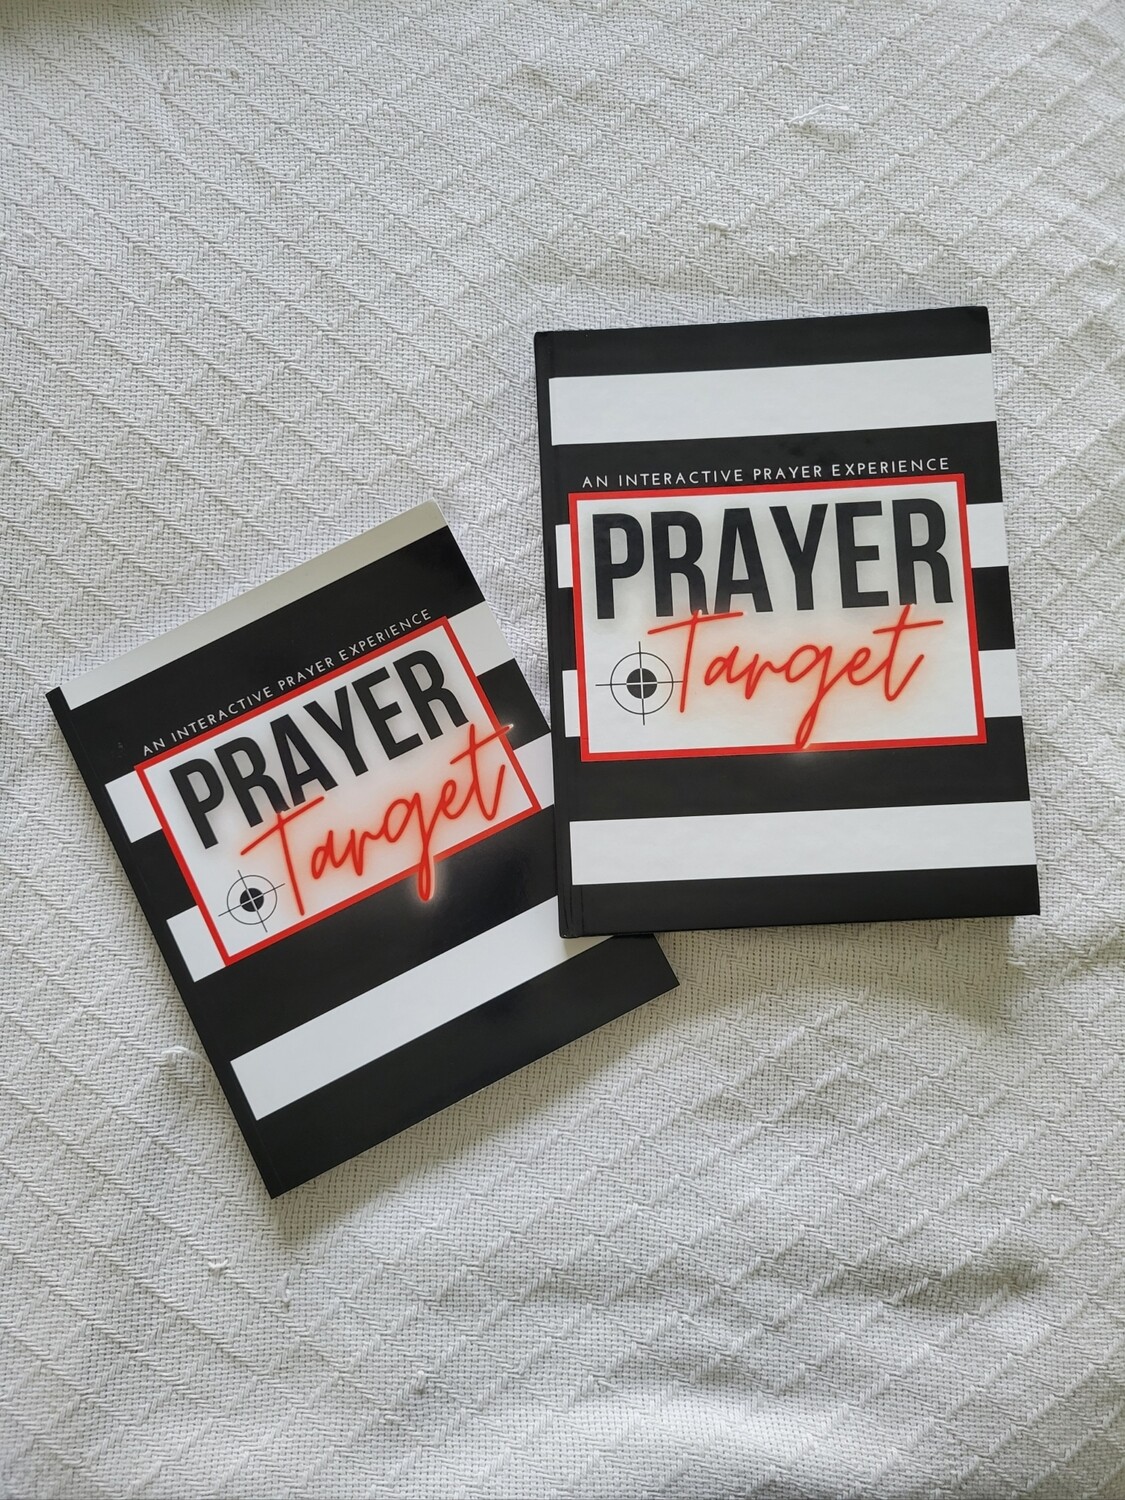 PRAYER Target: An Interactive Prayer Experience